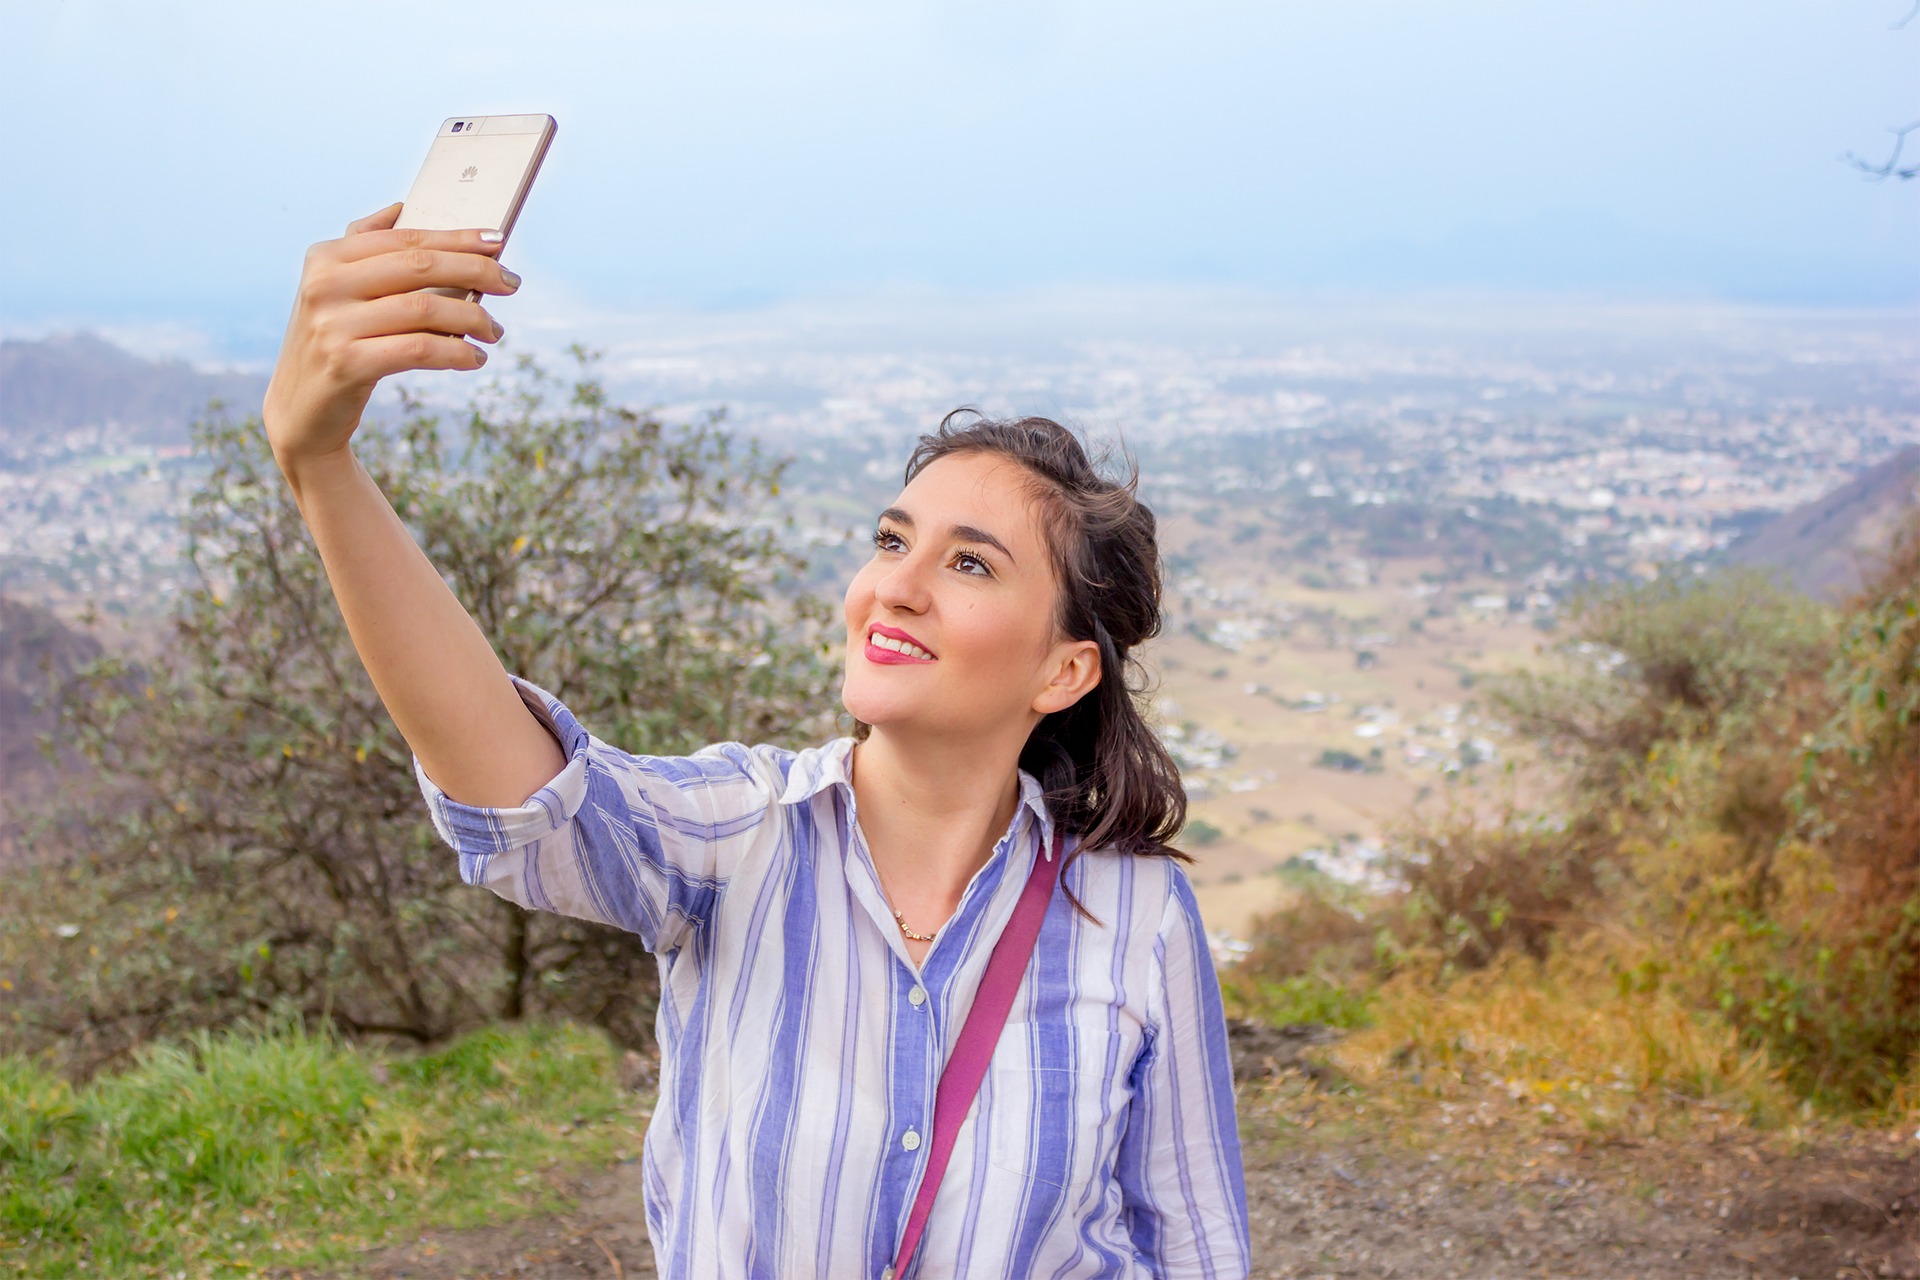 Hoe maak je de mooiste en leukste selfie voor in je fotoboek?